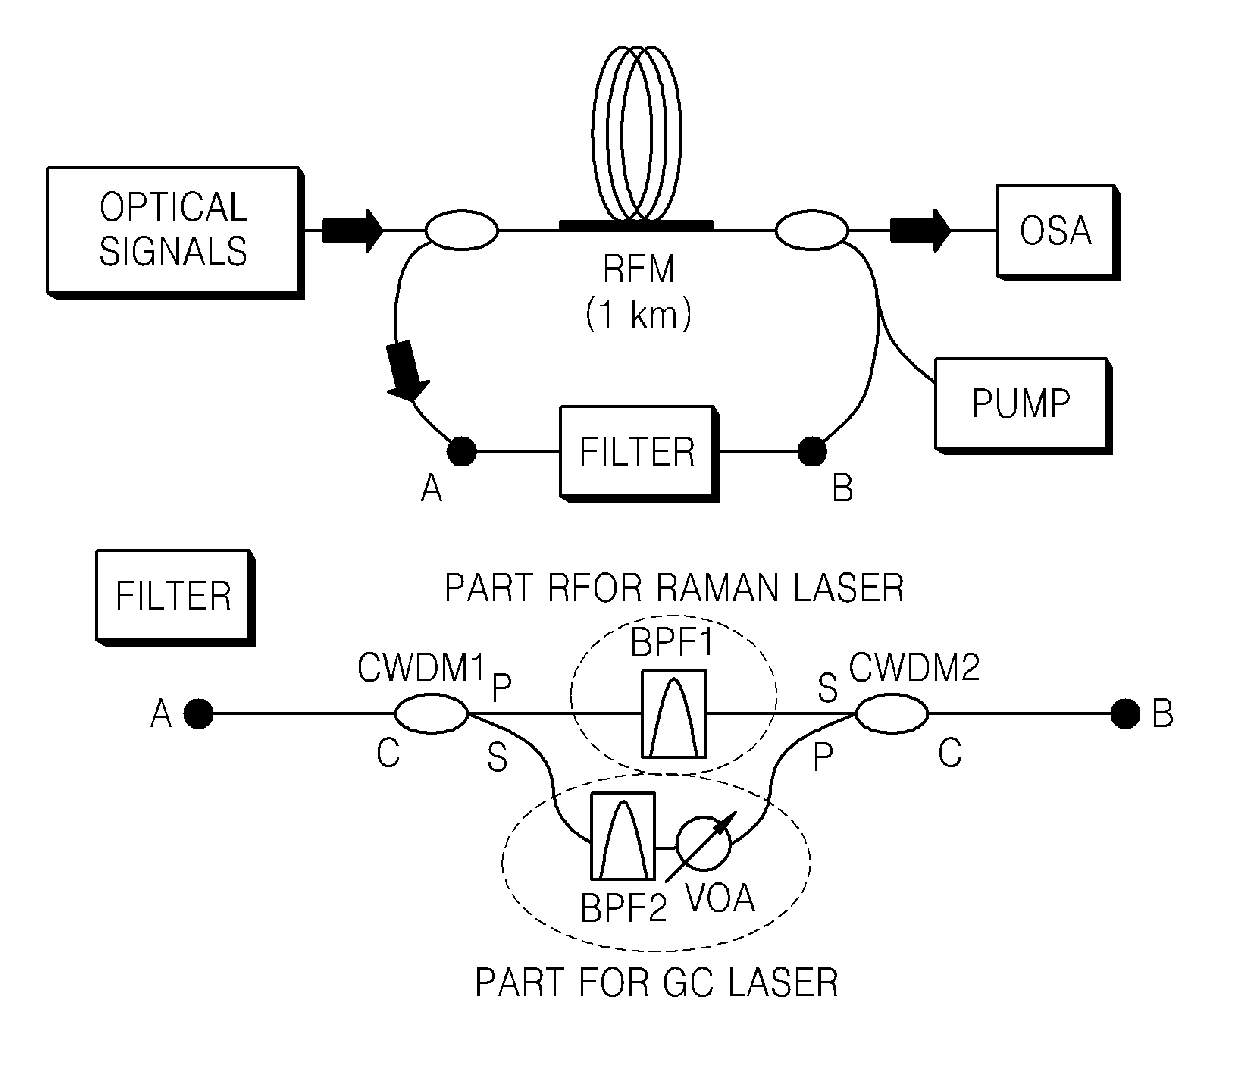 Gain-clamped optical amplifying apparatus using fiber raman amplifier having raman cavity